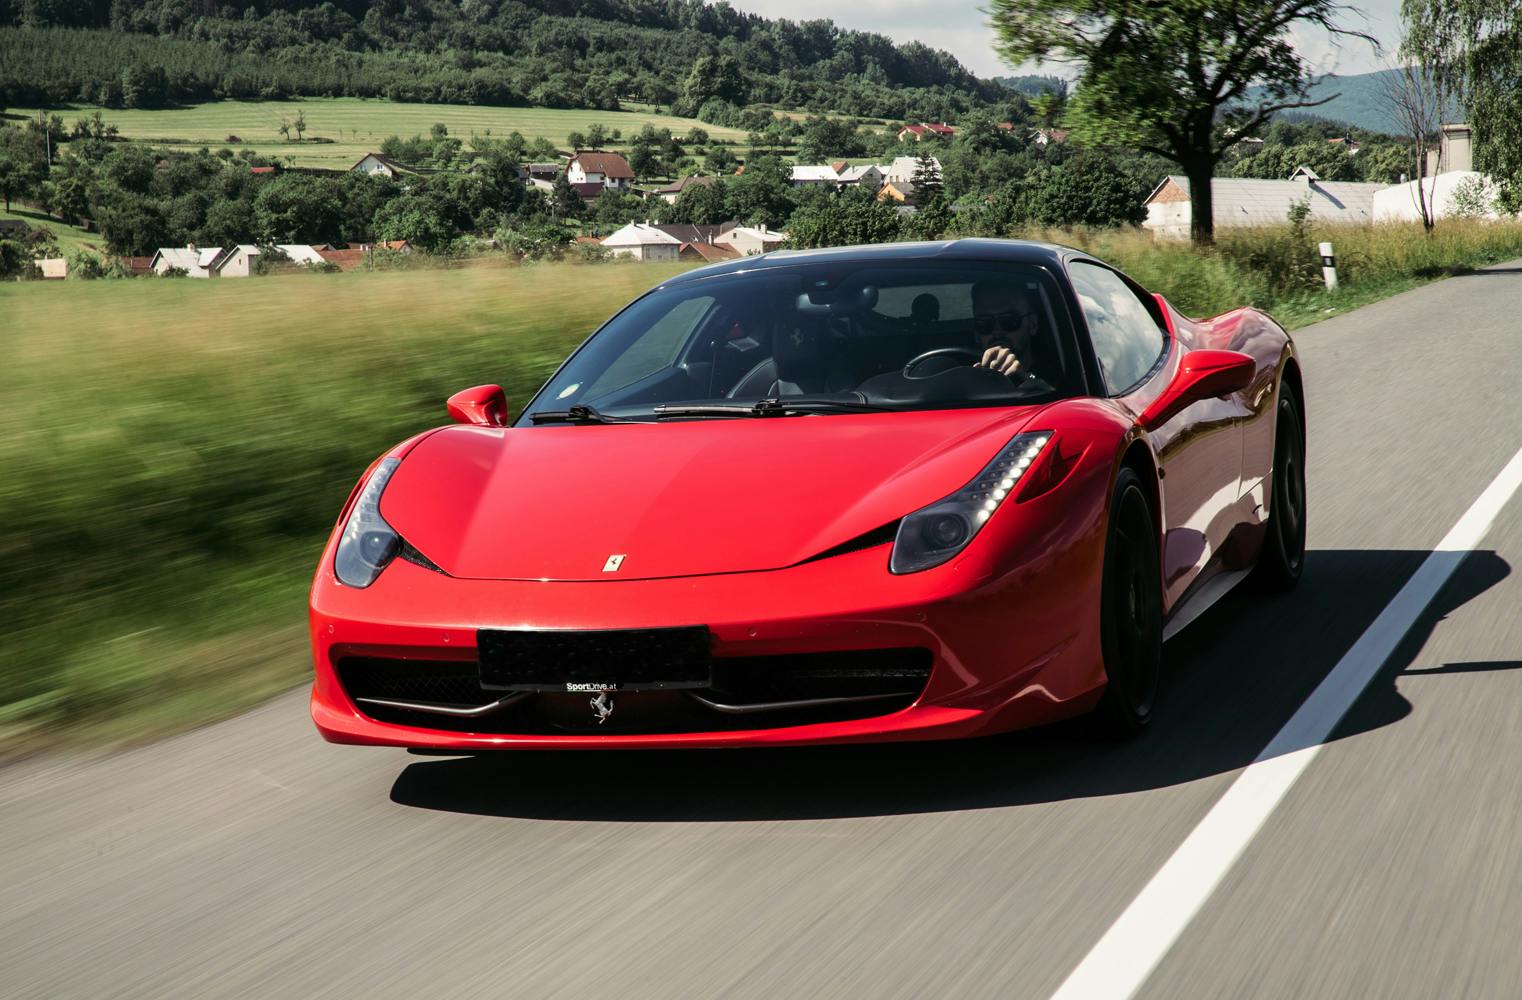 Traumauto fahren | Probefahrt mit dem Ferrari 458 Italia